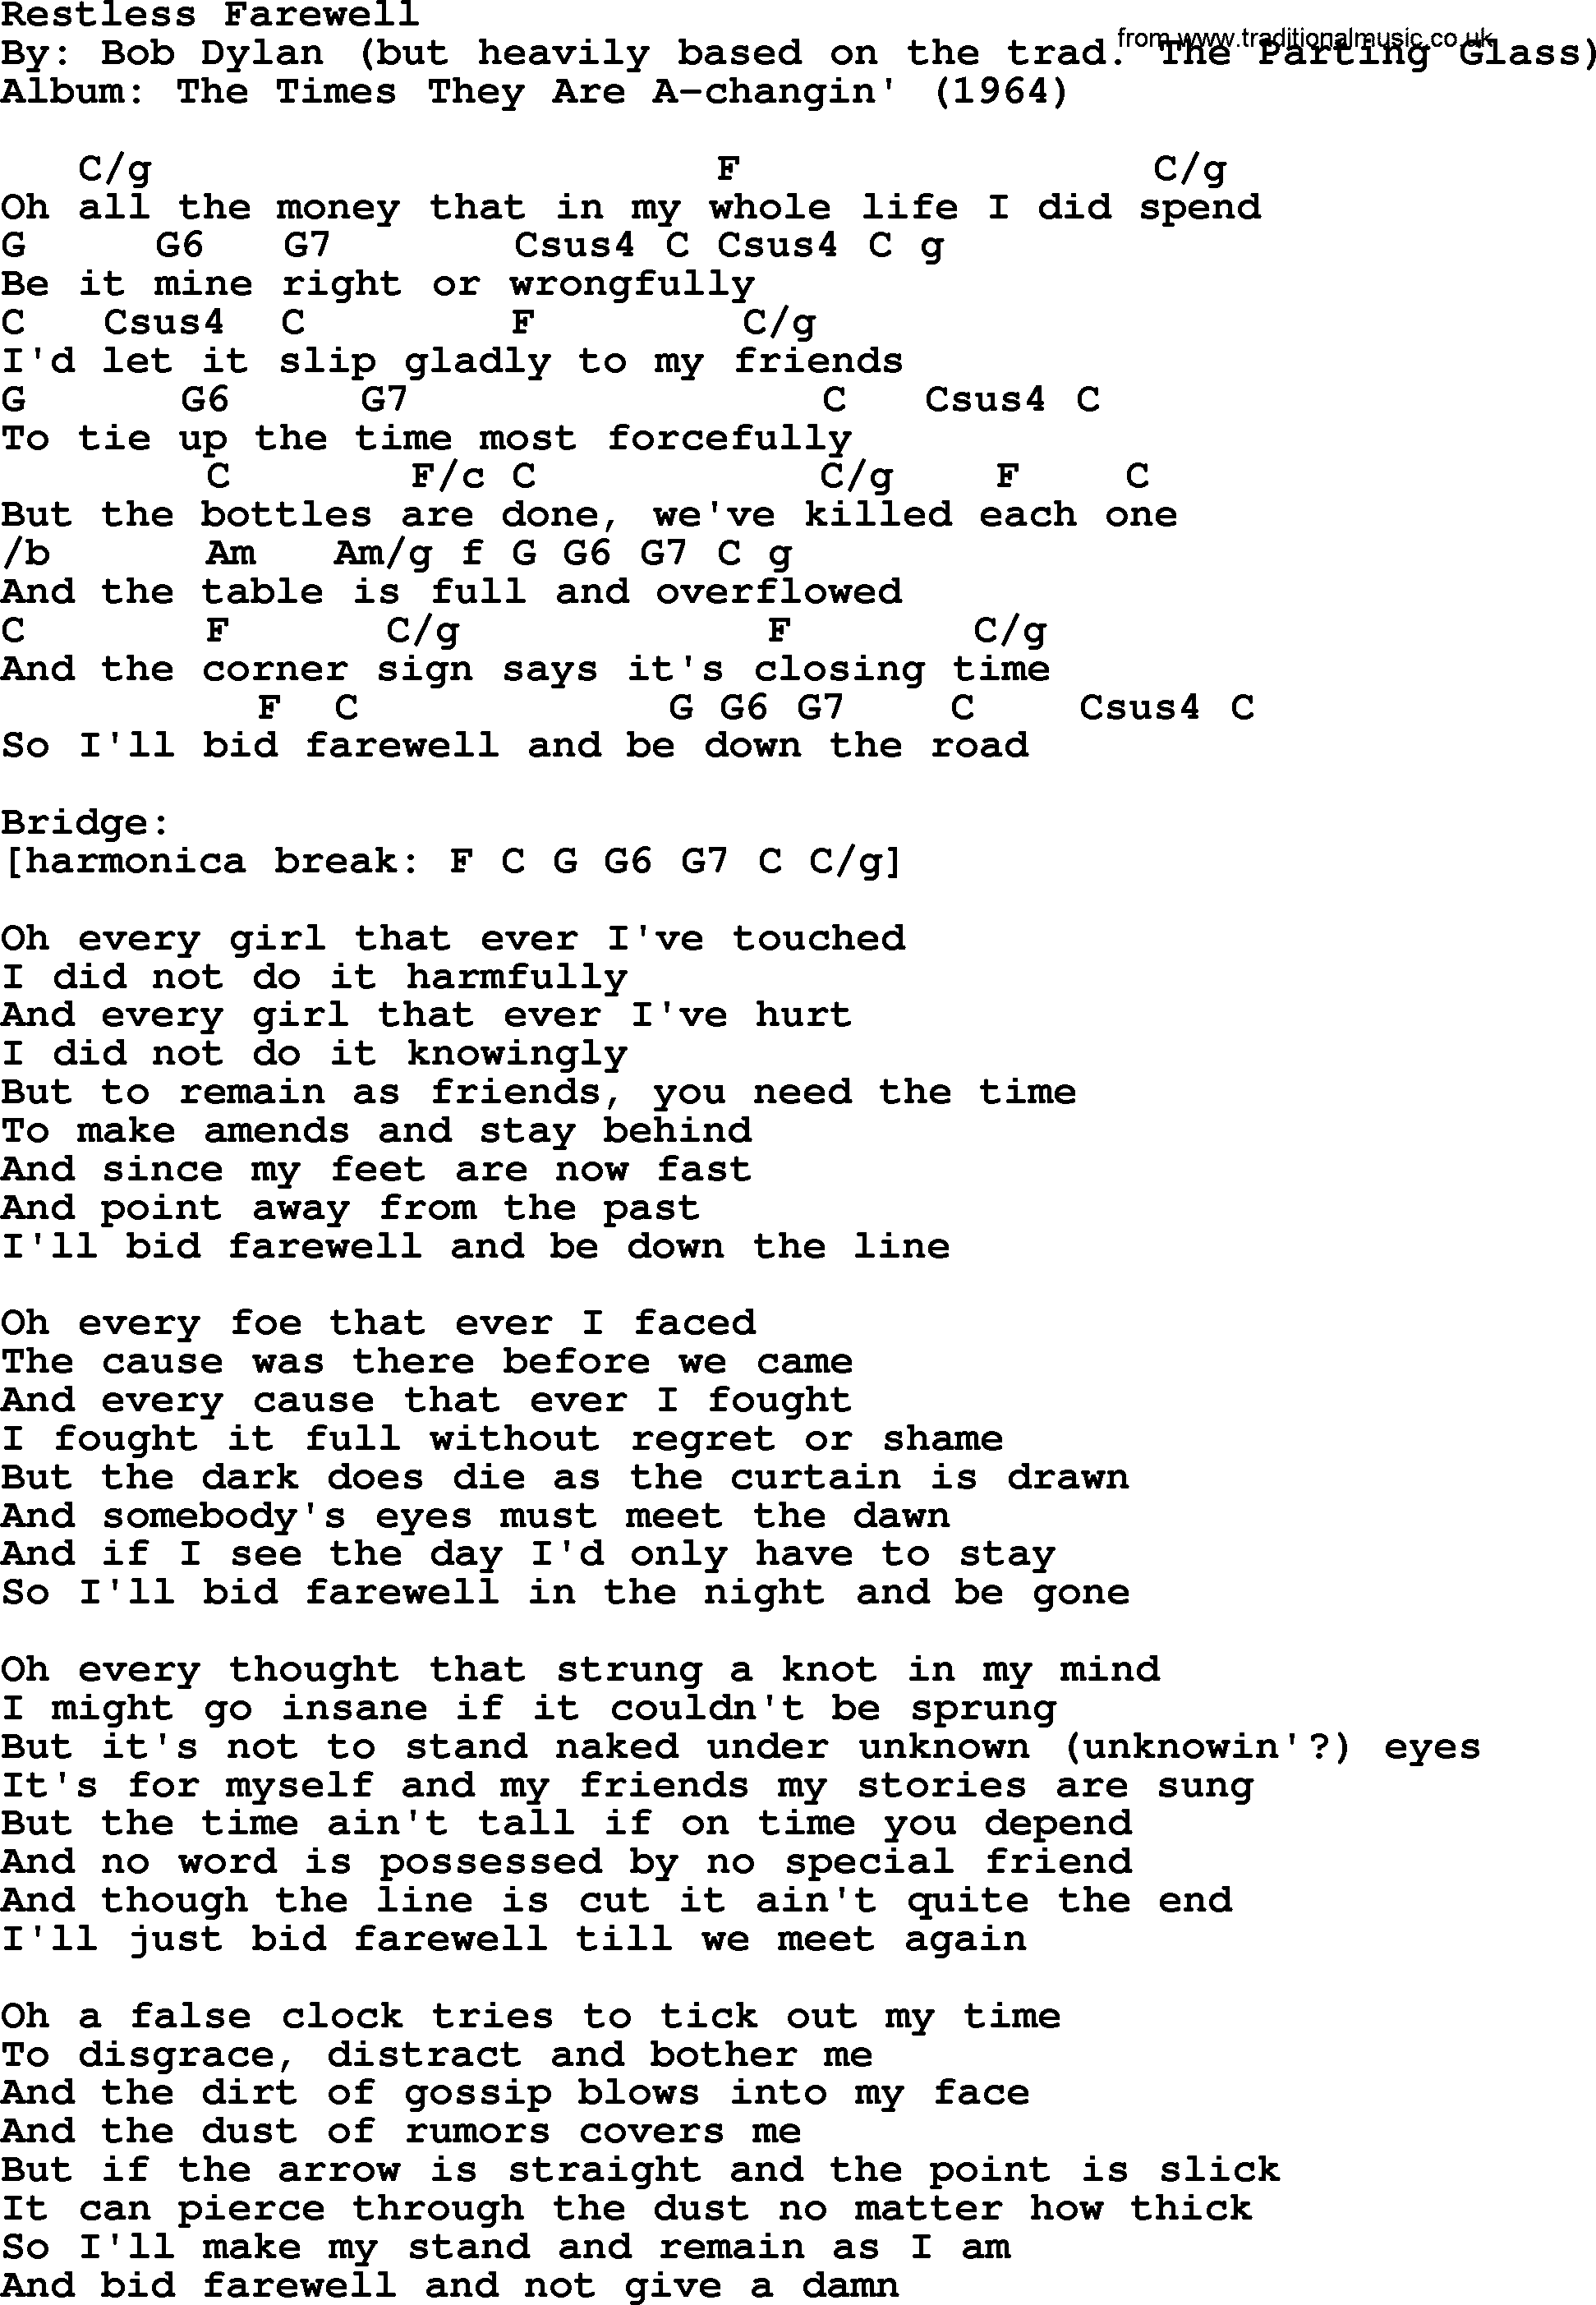 Bob Dylan song, lyrics with chords - Restless Farewell